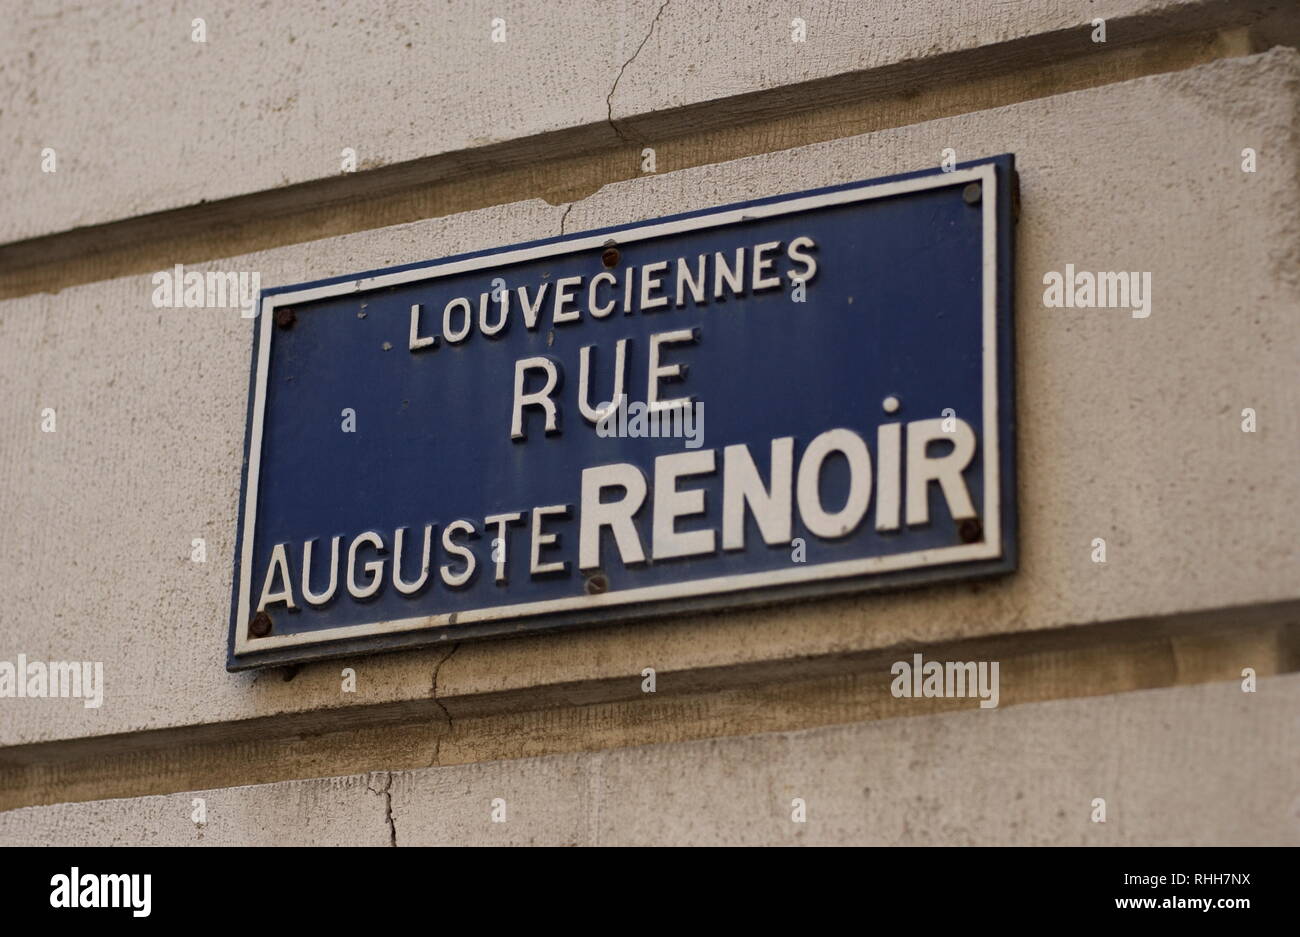 AJAXNETPHOTO. 2008. LOUVECIENNES,Francia. - STREET nel villaggio chiamato per l'artista Pierre Auguste Renoir 1841 - 1919. Foto:JONATHAN EASTLAND/AJAX REF:D82912 1904 Foto Stock